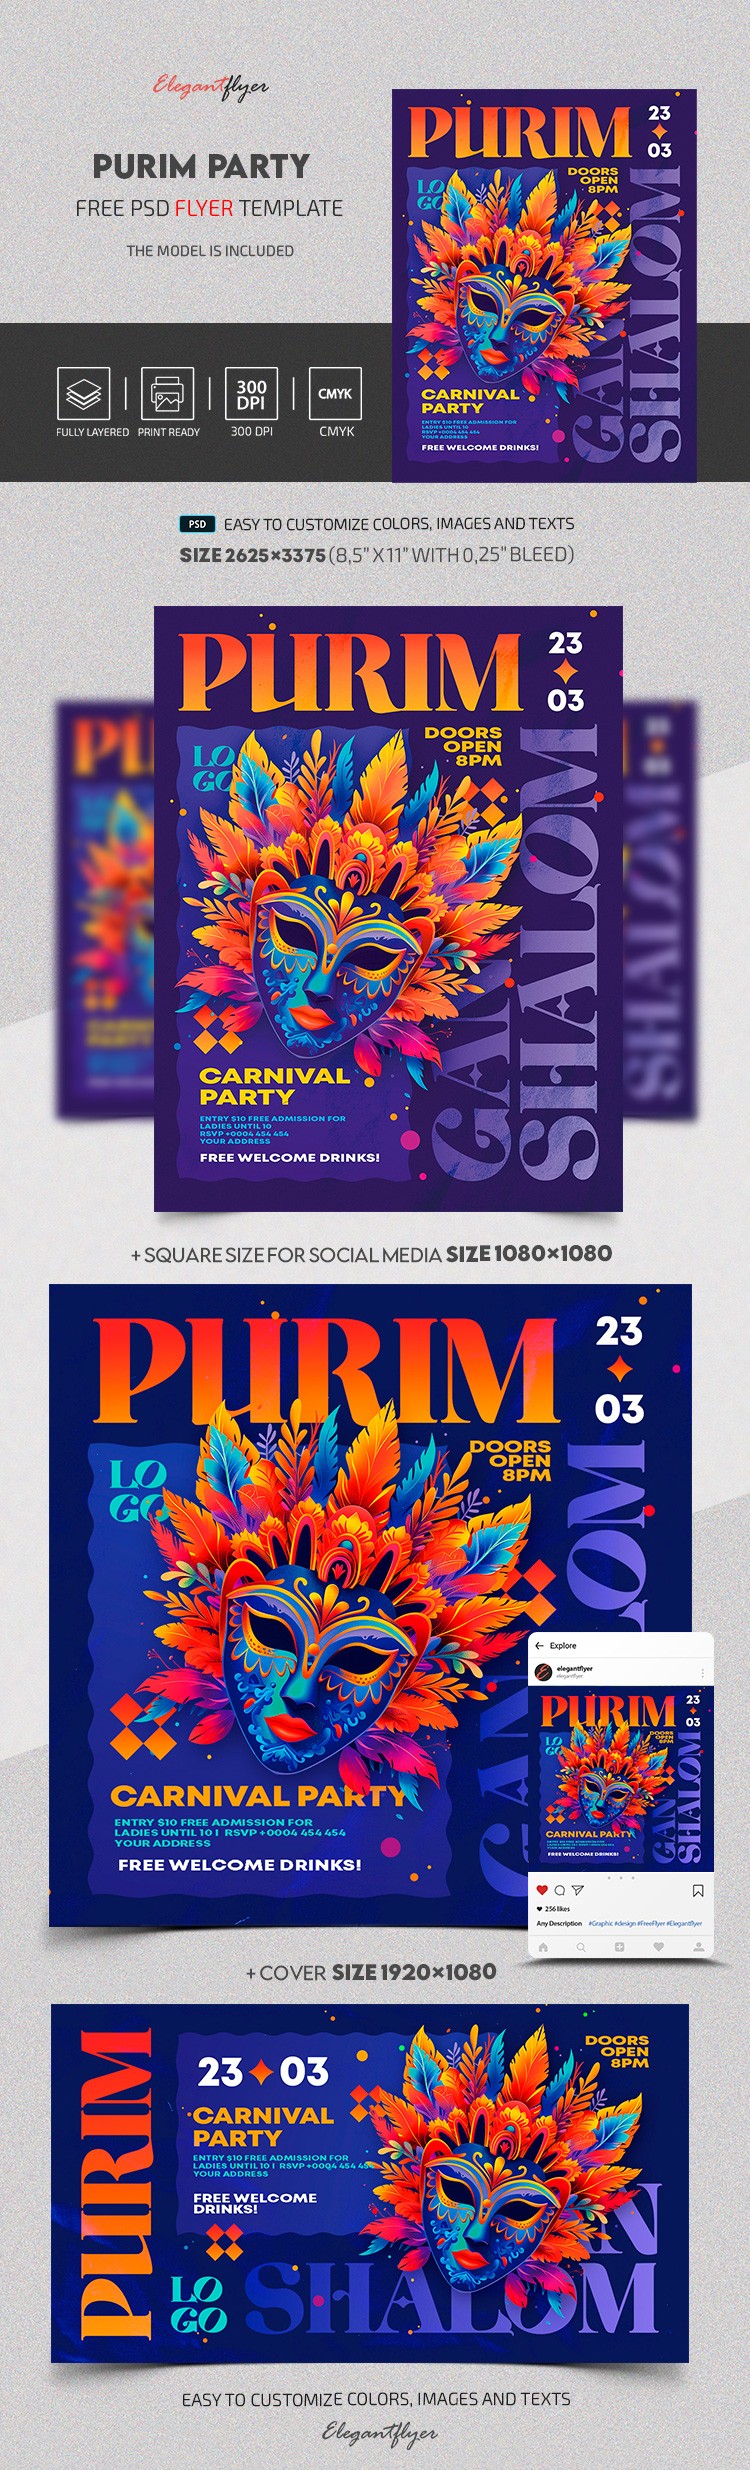 Purim-Party by ElegantFlyer